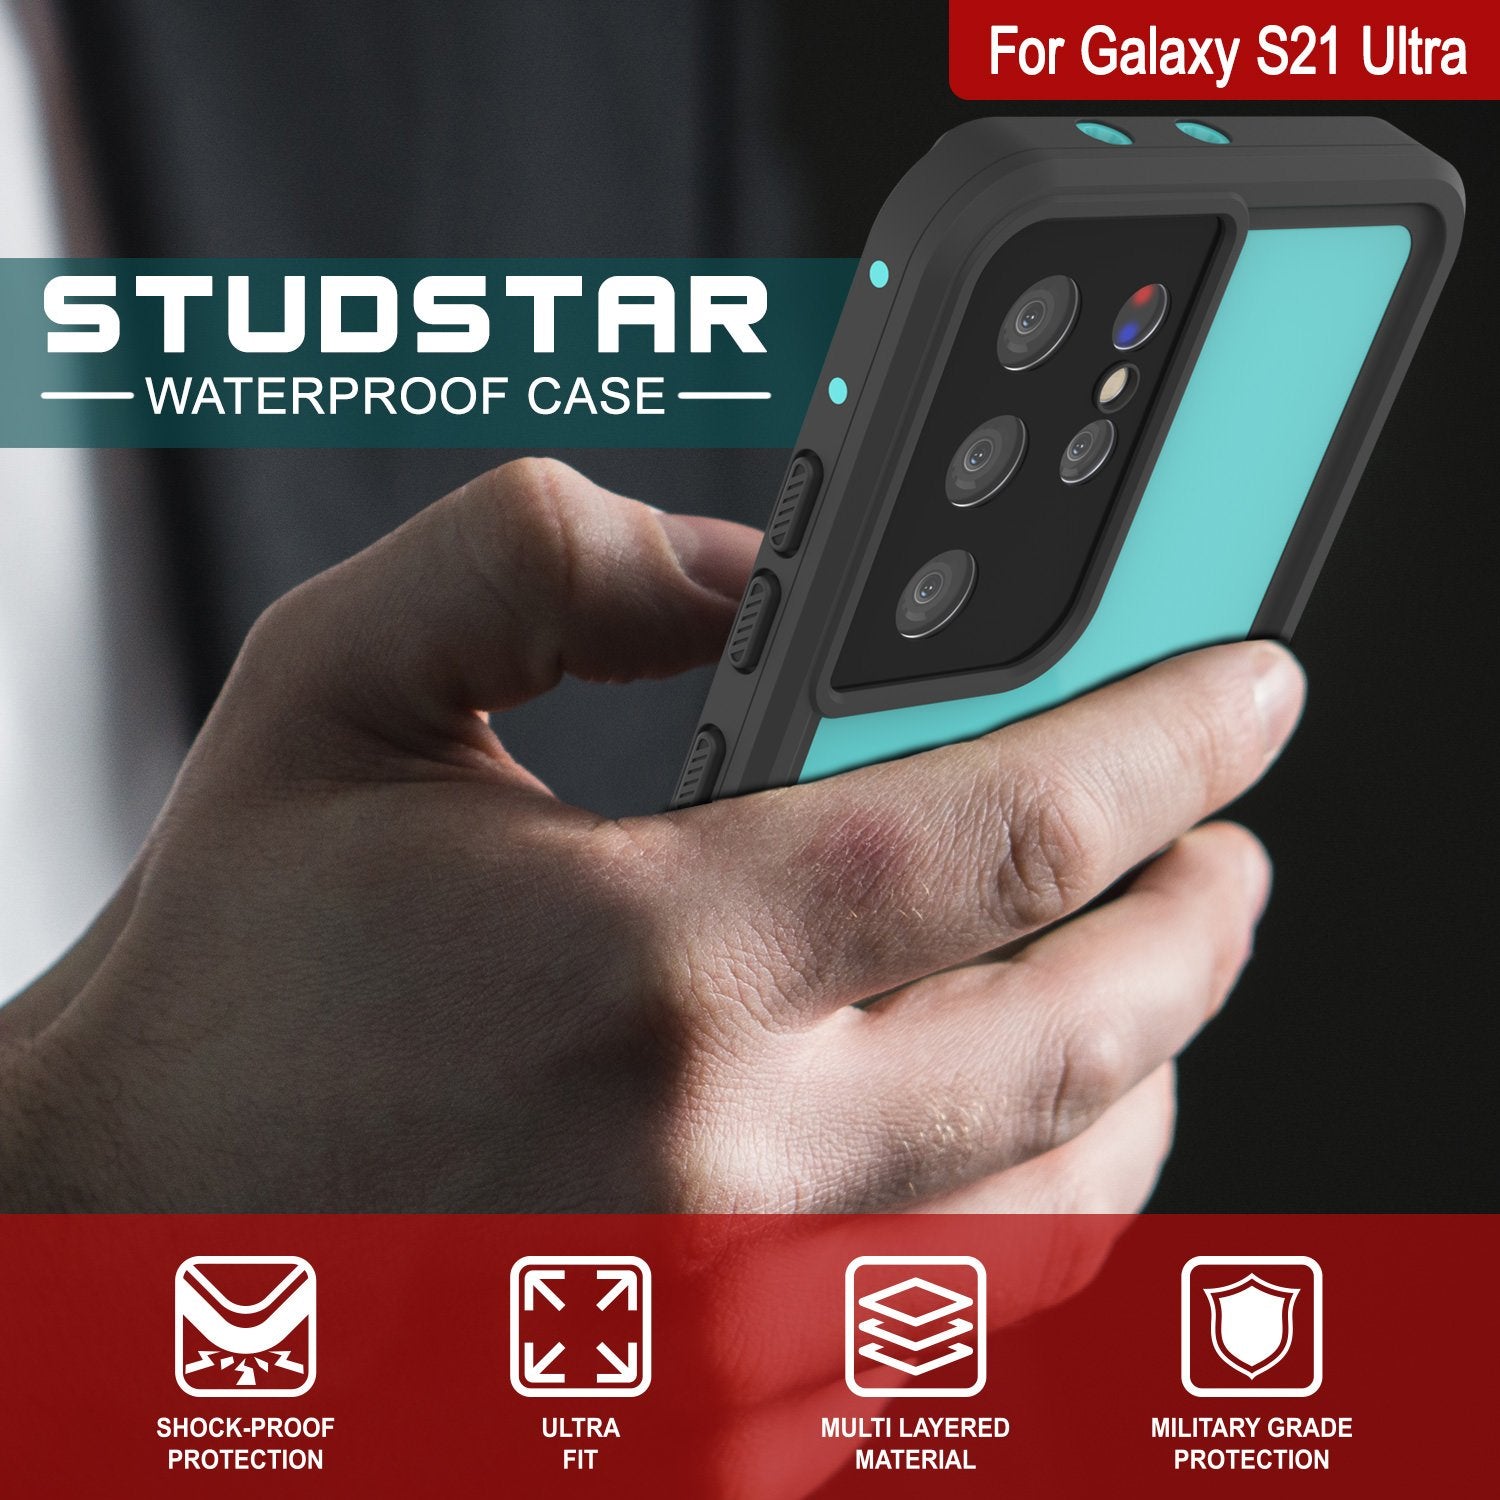 Galaxy S21 Ultra Waterproof Case PunkCase StudStar Teal Thin 6.6ft Underwater IP68 Shock/Snow Proof